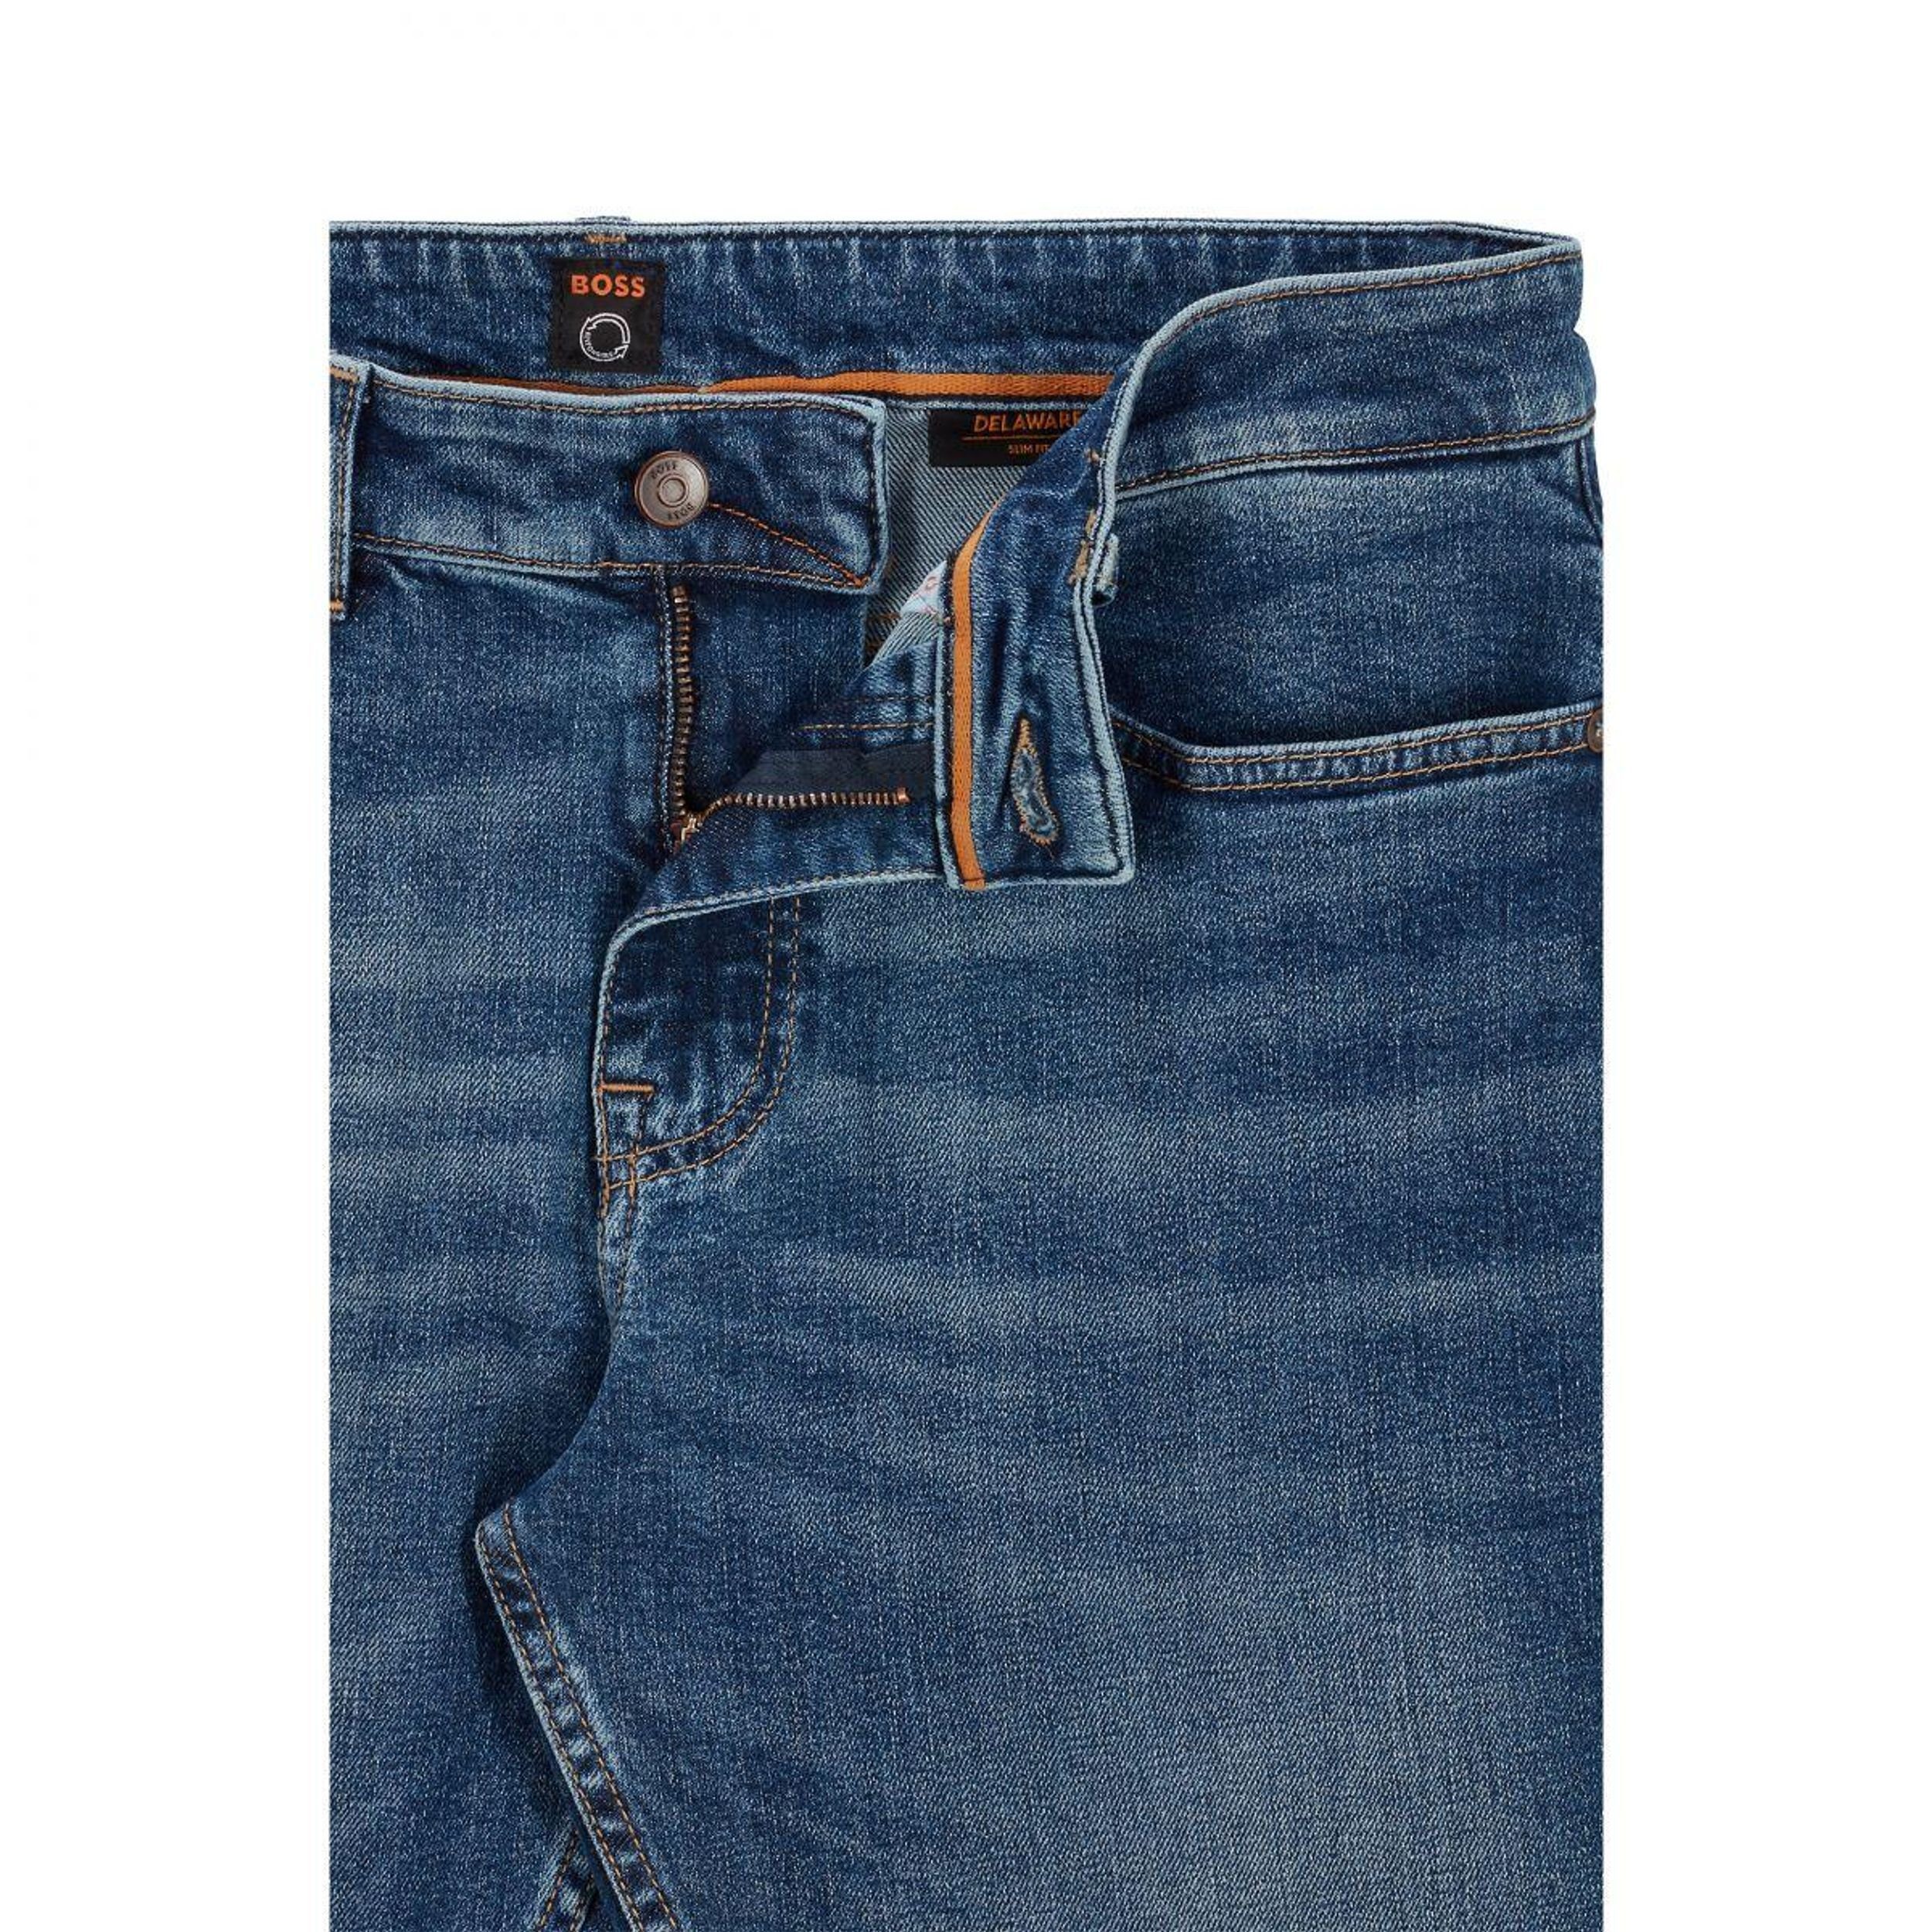 BOSS ORANGE Straight-Jeans "Delaware" Boss blau medium Orange blue Jeans